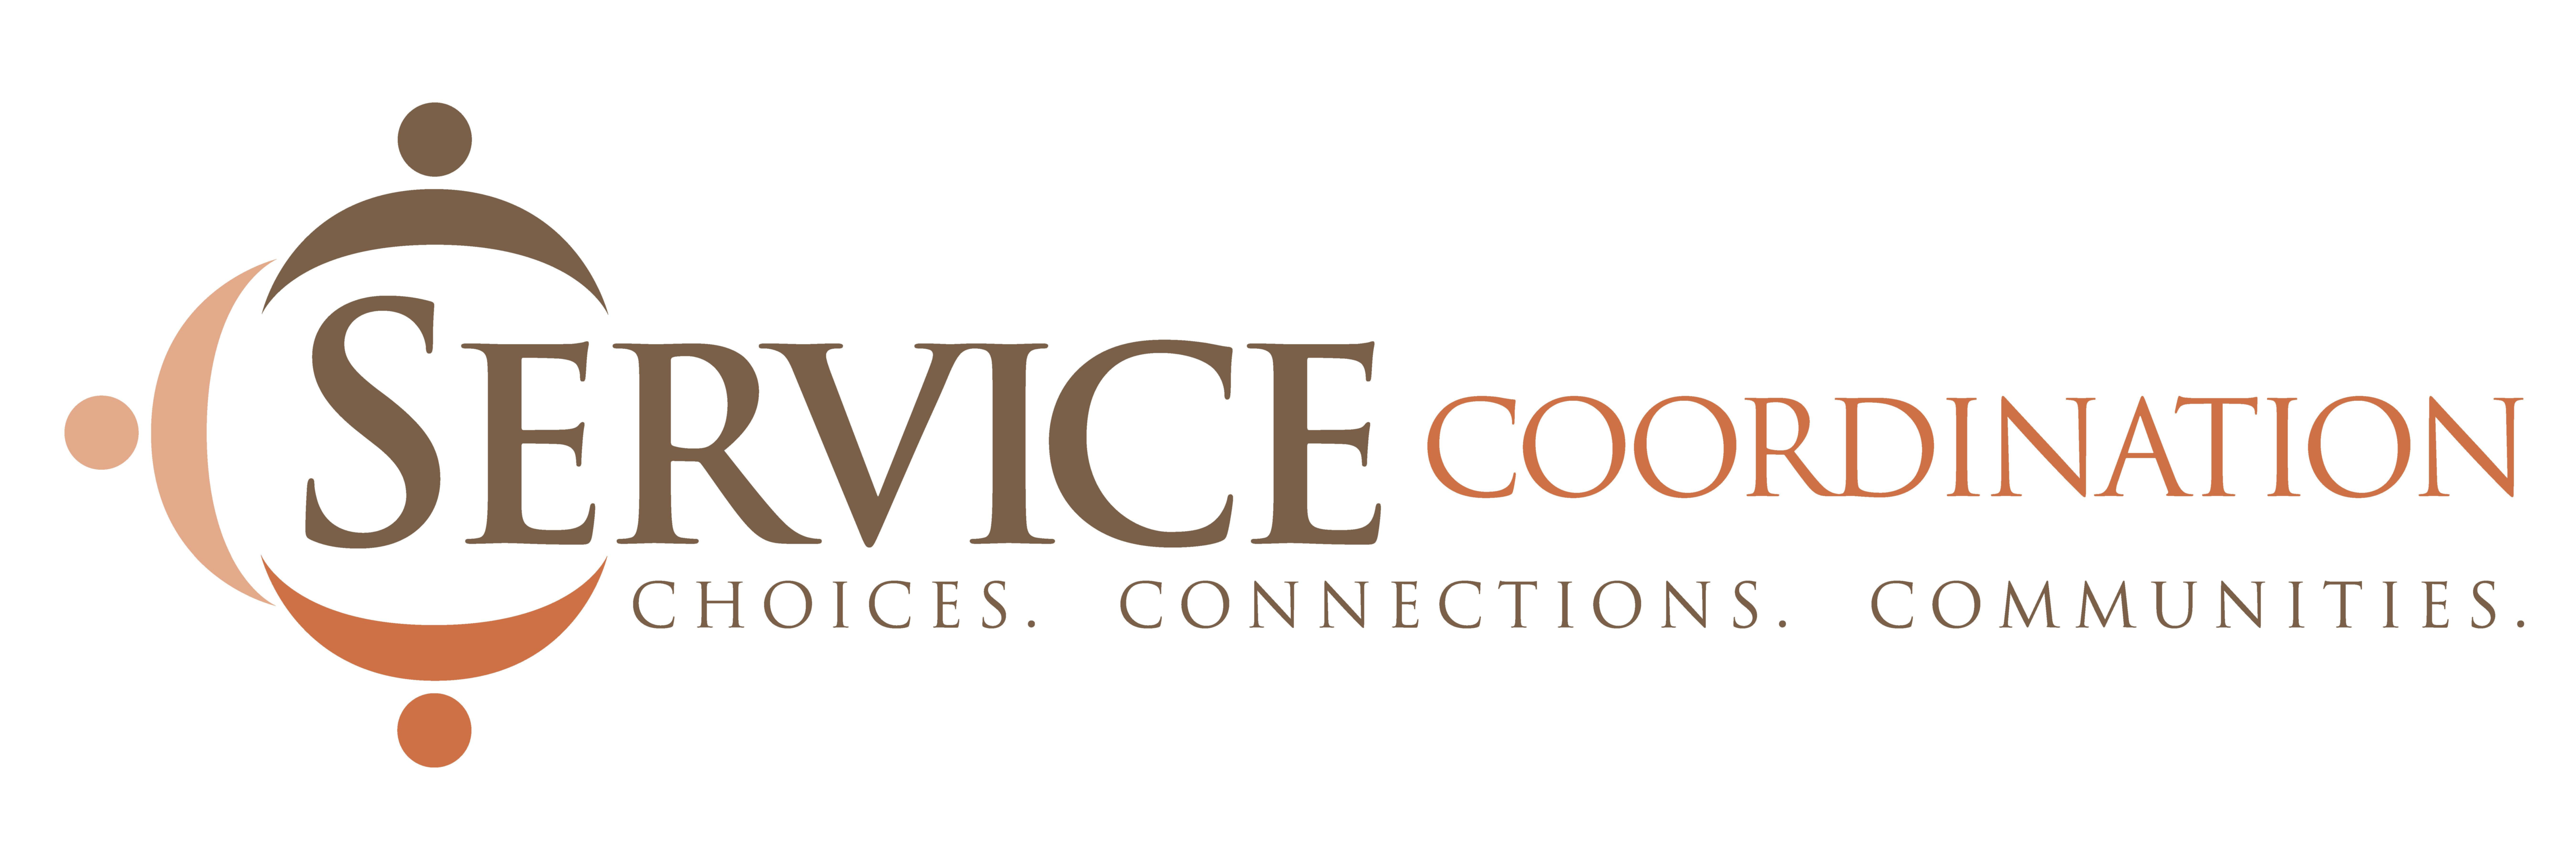 Service Coordination, Inc. logo